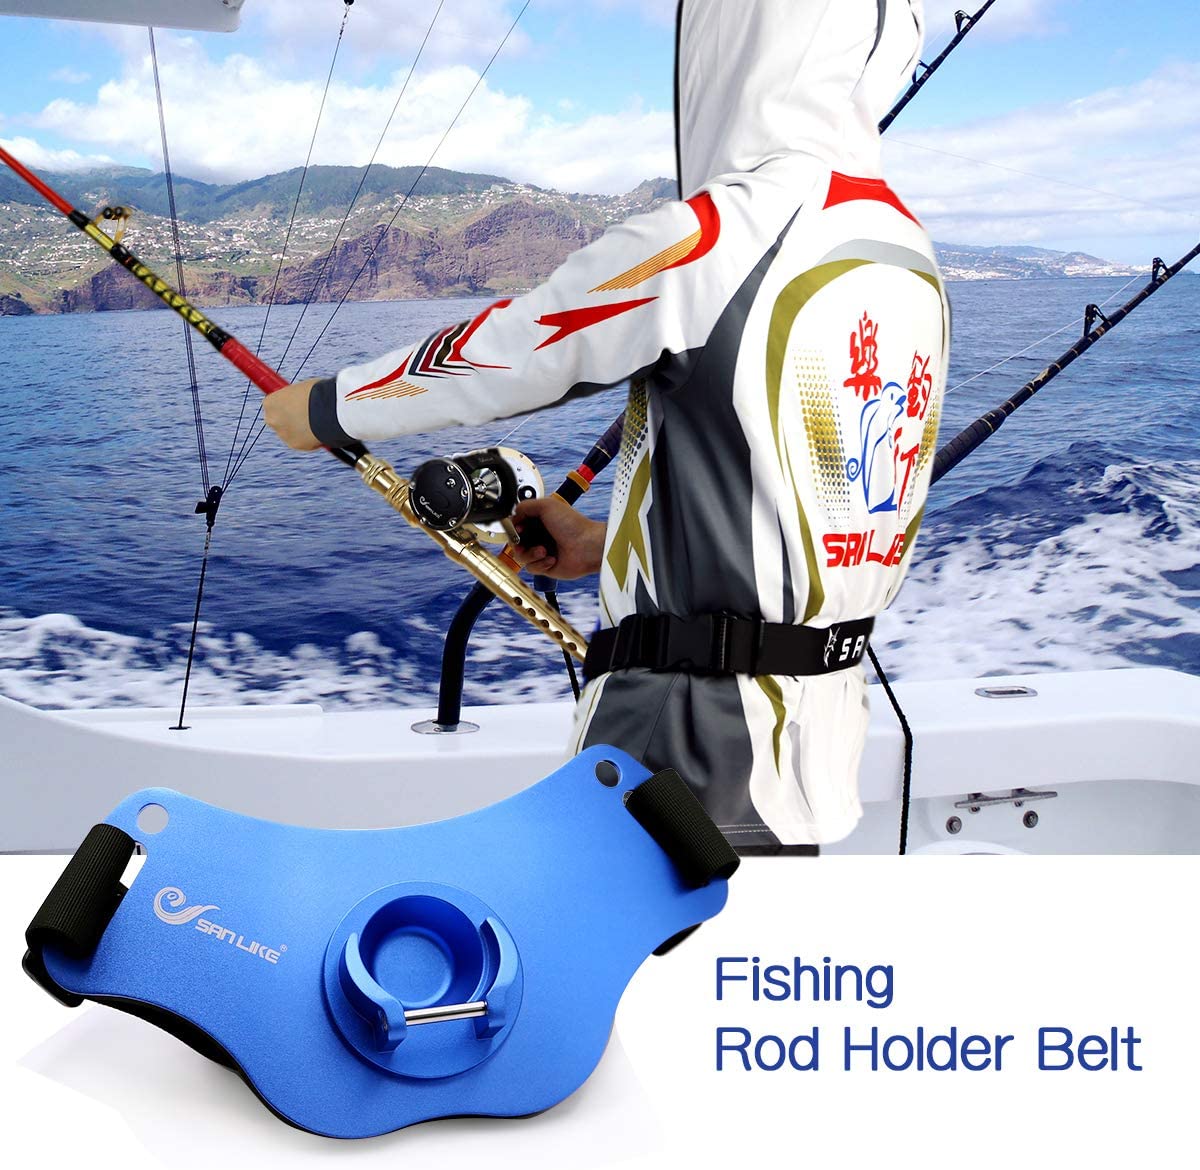  SAN LIKE Fishing Belt Rod Holder Aluminum Fighting Belt -  Adjustable Aluminum Waist Fighting Belt rod belt Stand-up Offshore Gimbal  Padded (Black) : Sports & Outdoors